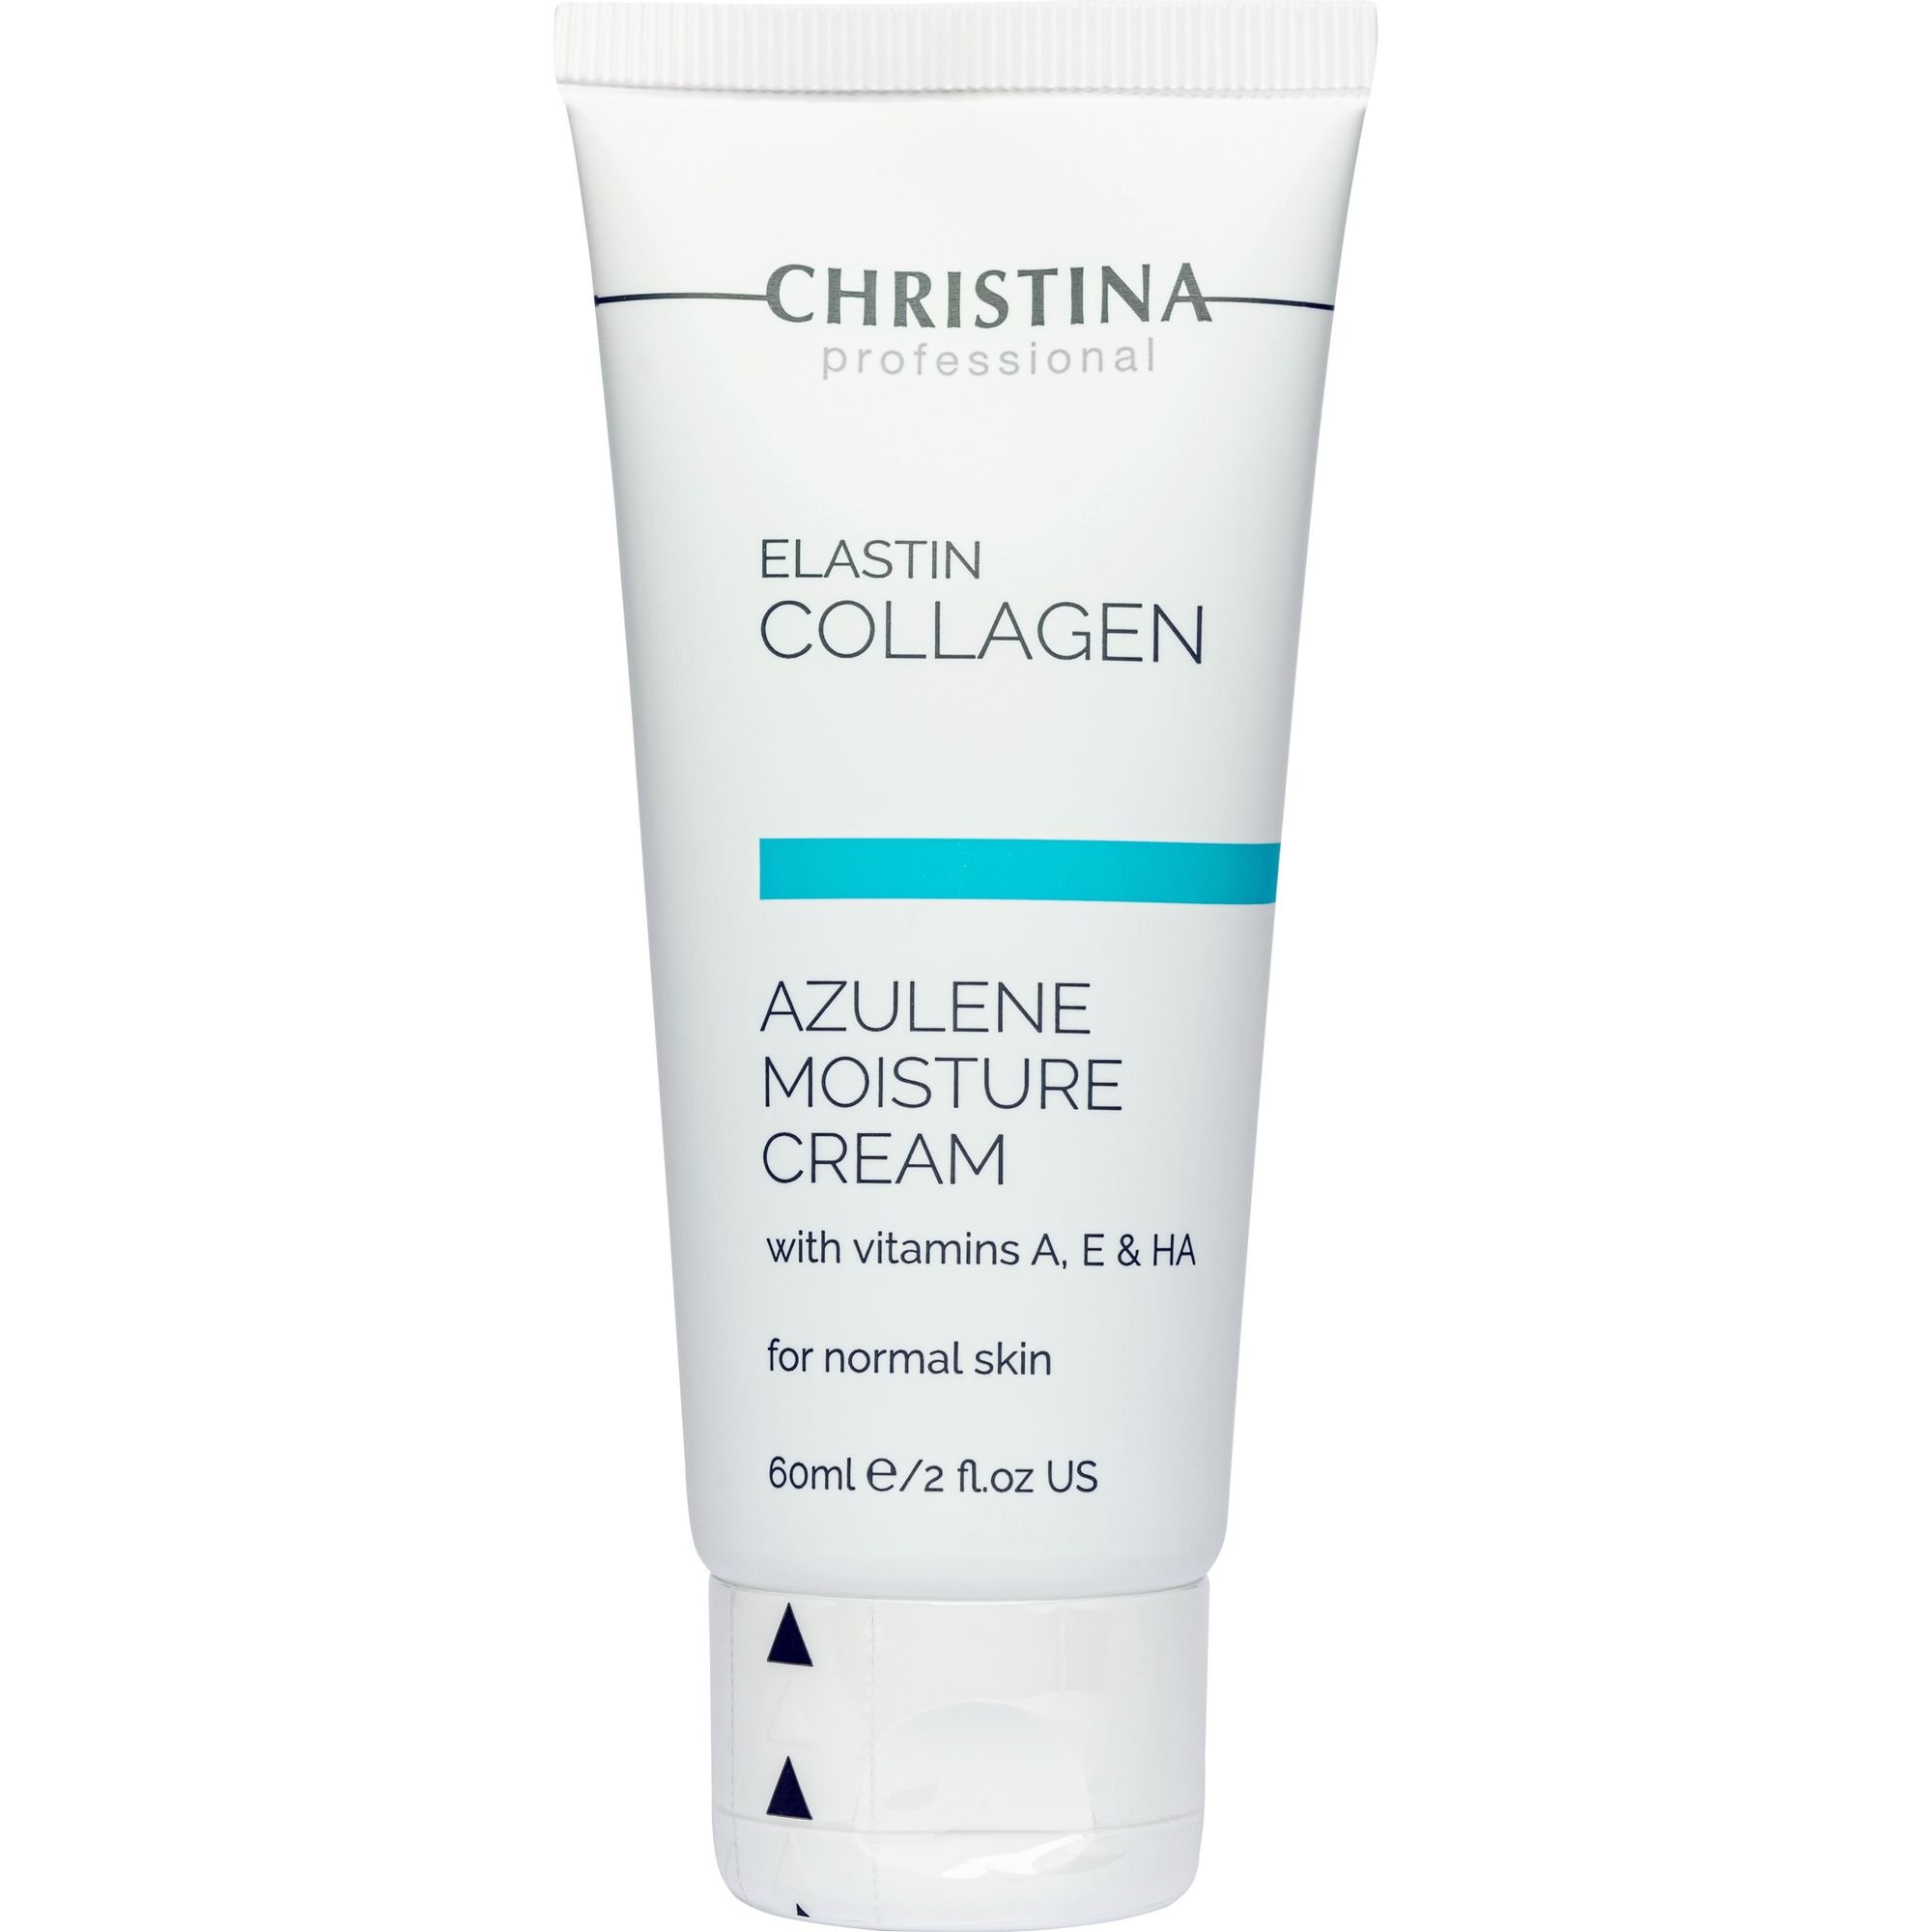 Зволожувальний крем для нормальної шкіри Christina Elastin Collagen Azulene Moisture Cream with Vitamins A, E & HA 60 мл - фото 1